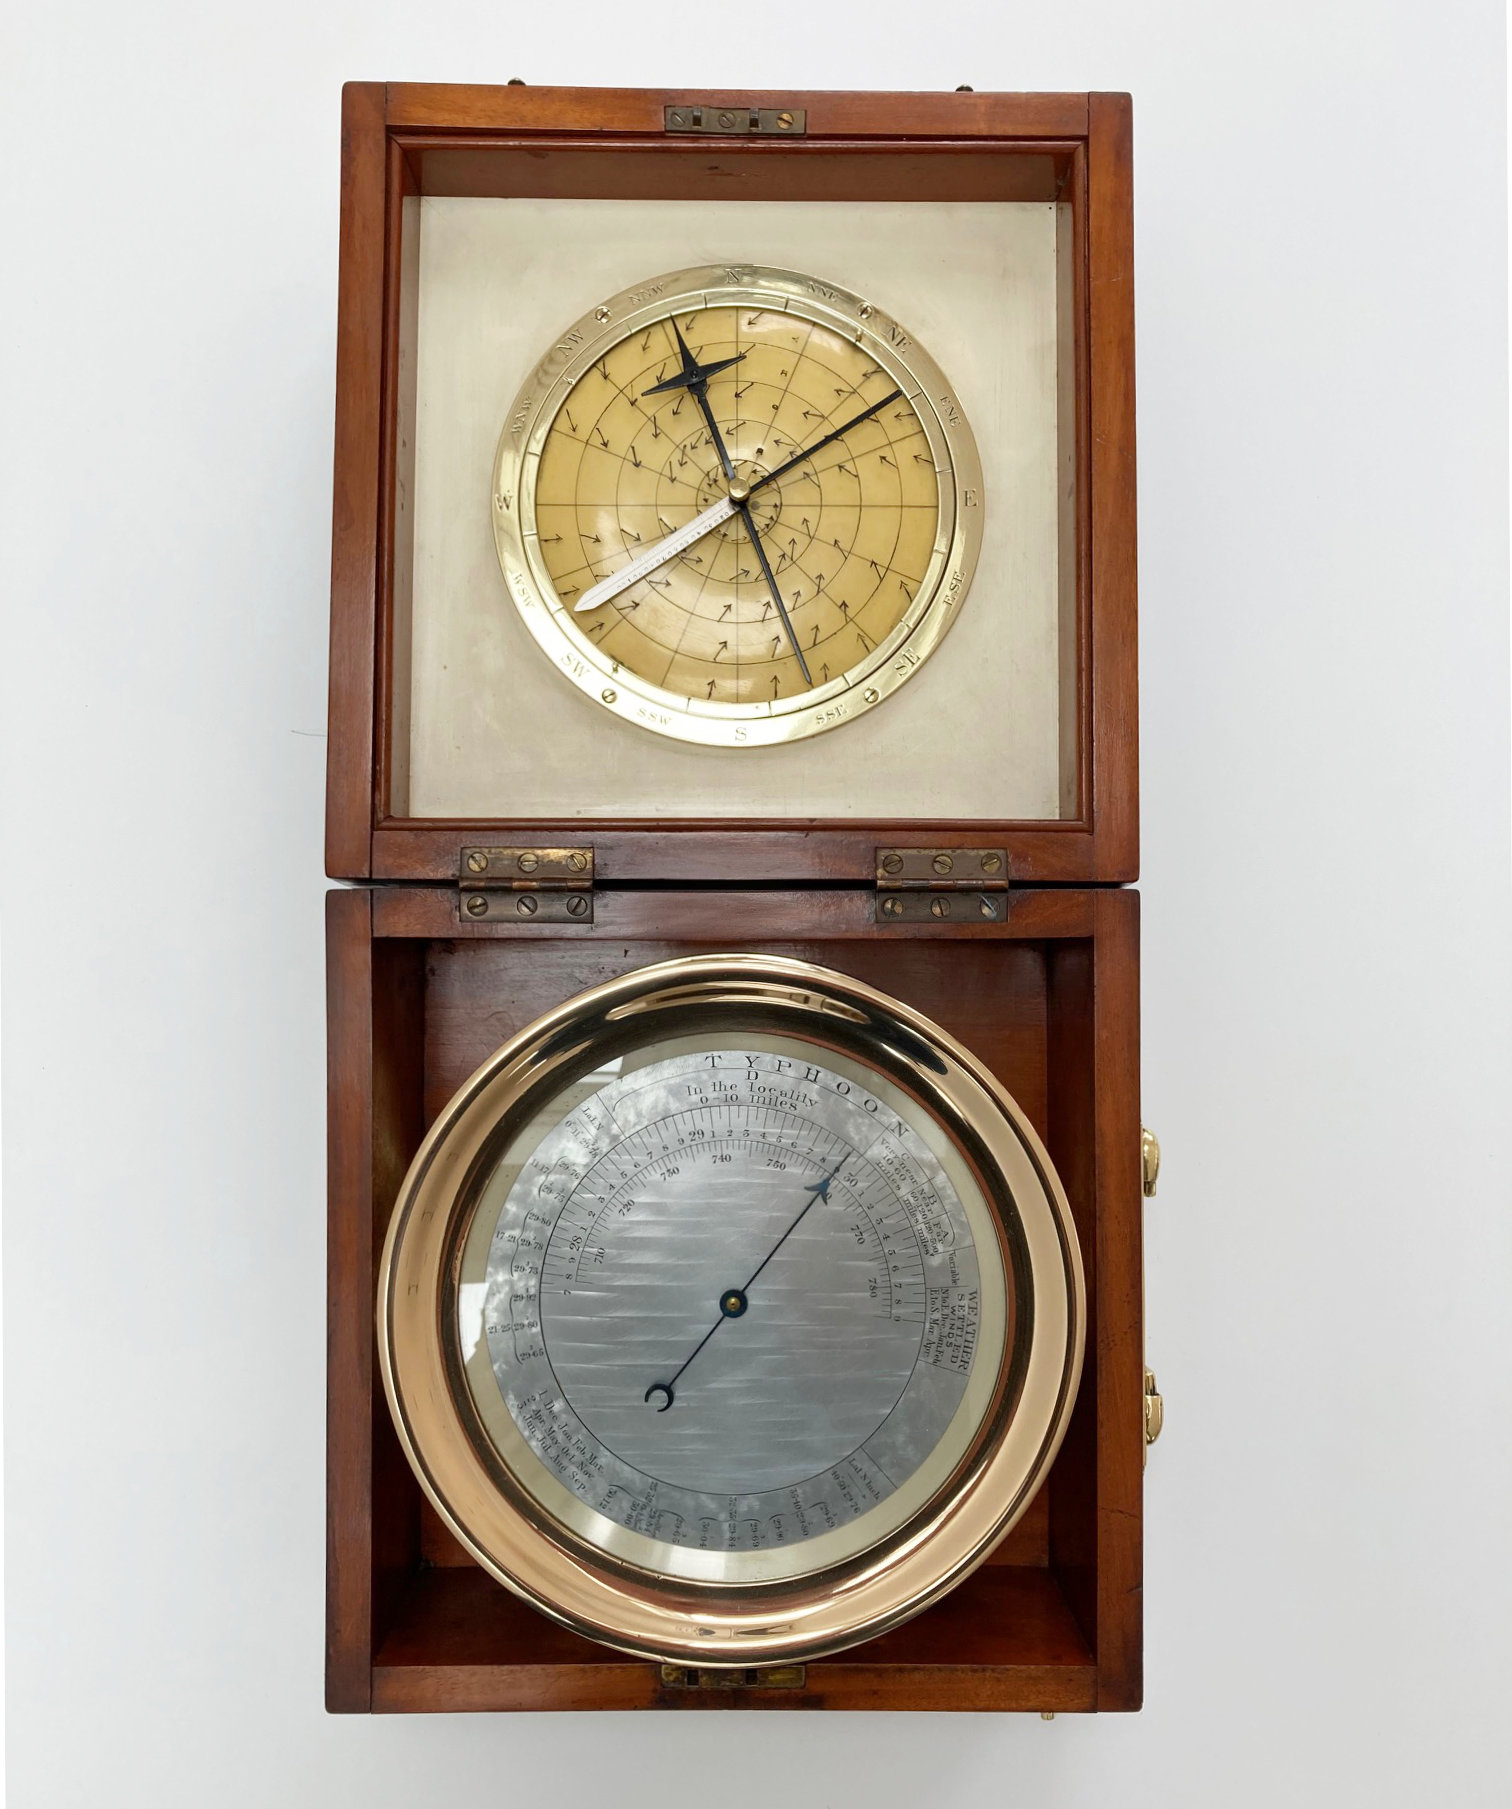 Early Twentieth Century Cased Barocyclonometer or Typhoon Barometer